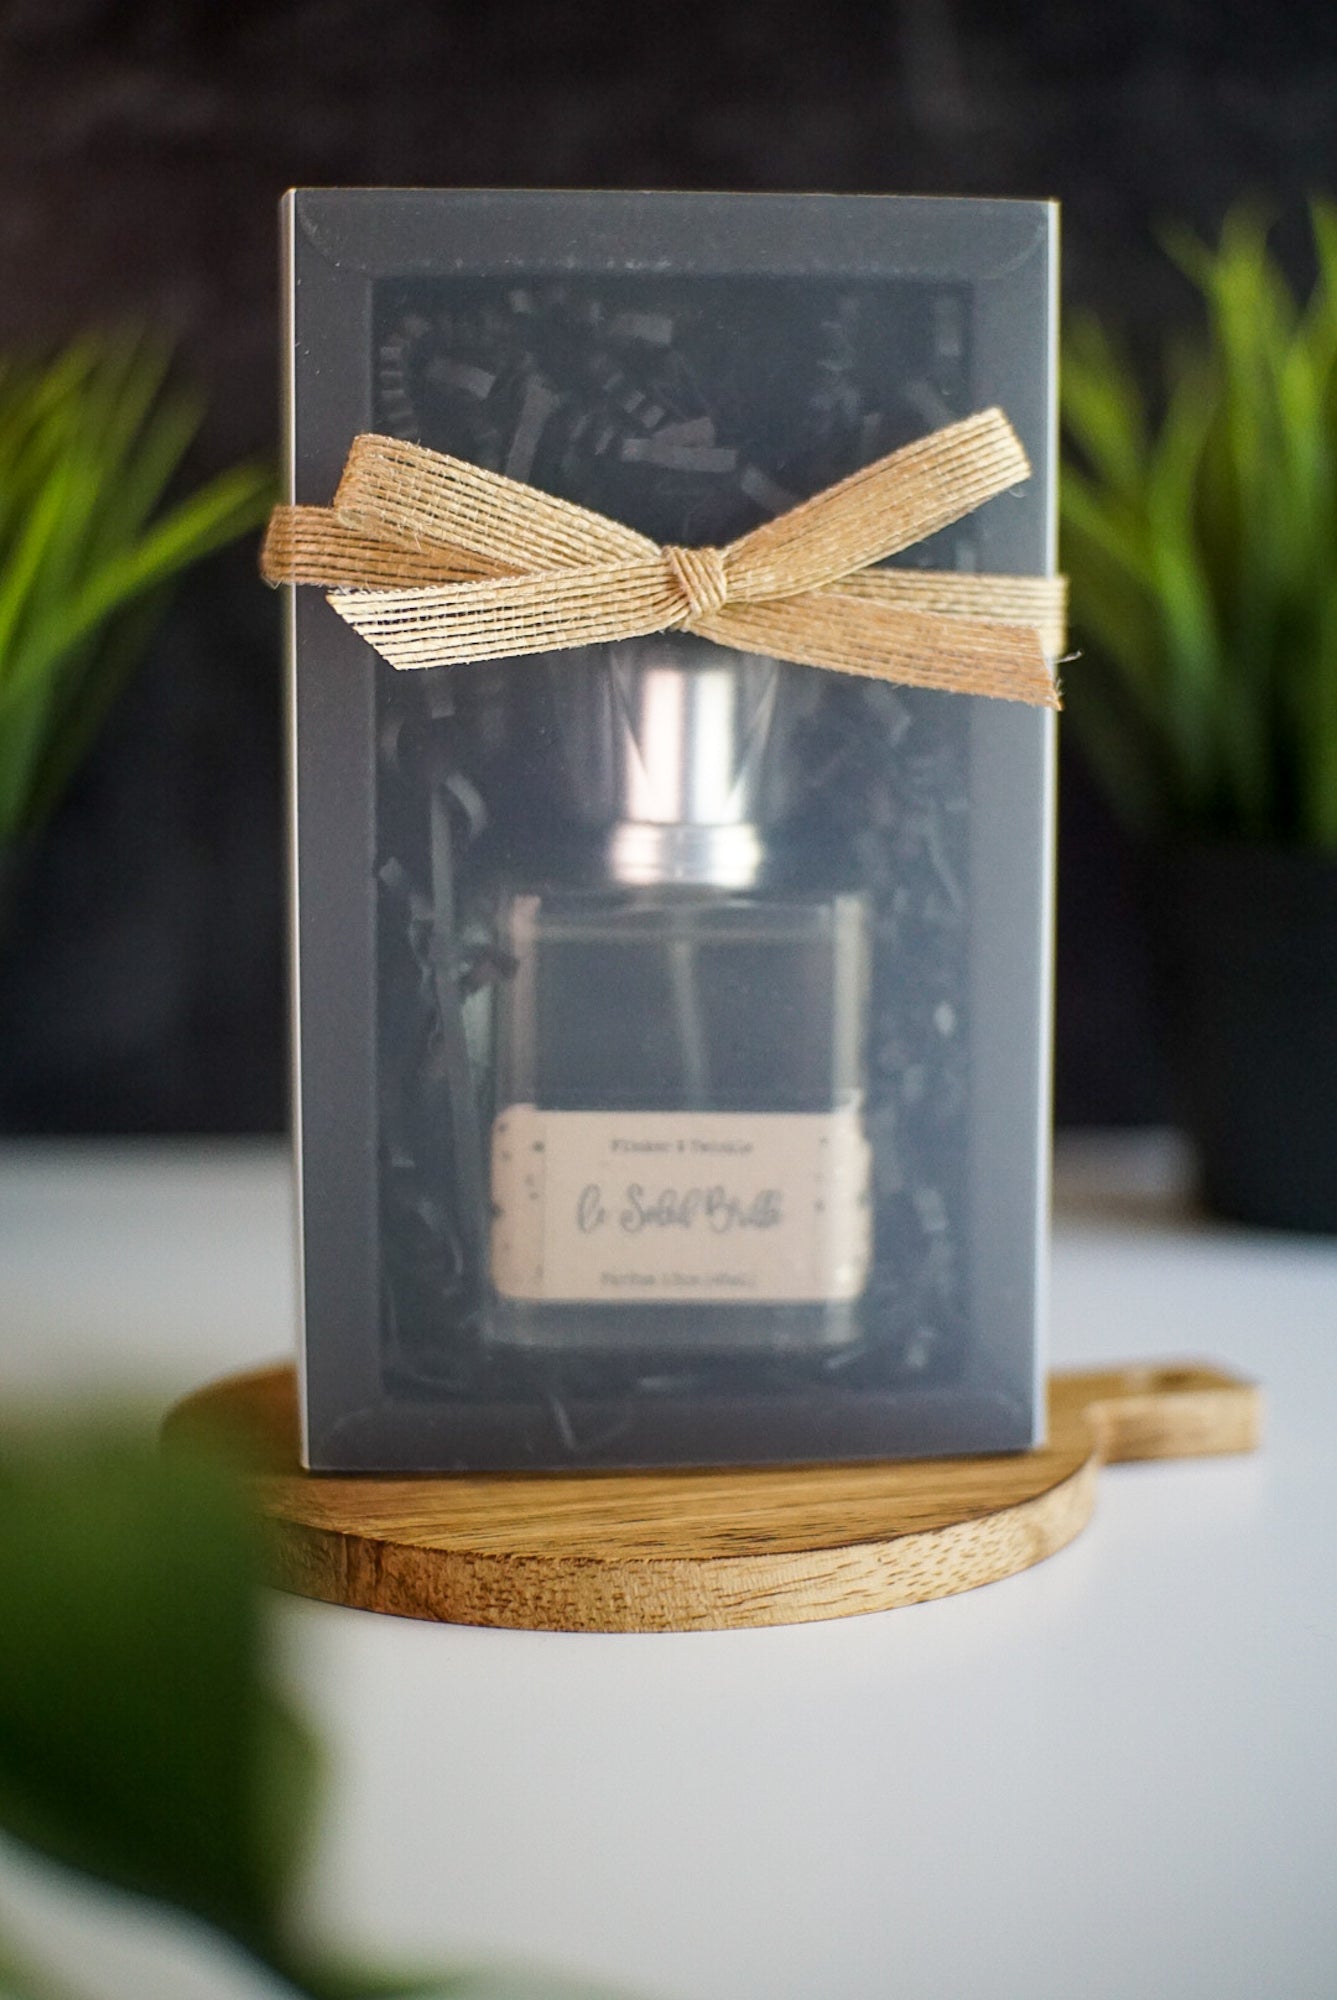 sol de janeiro inspired perfume gift box